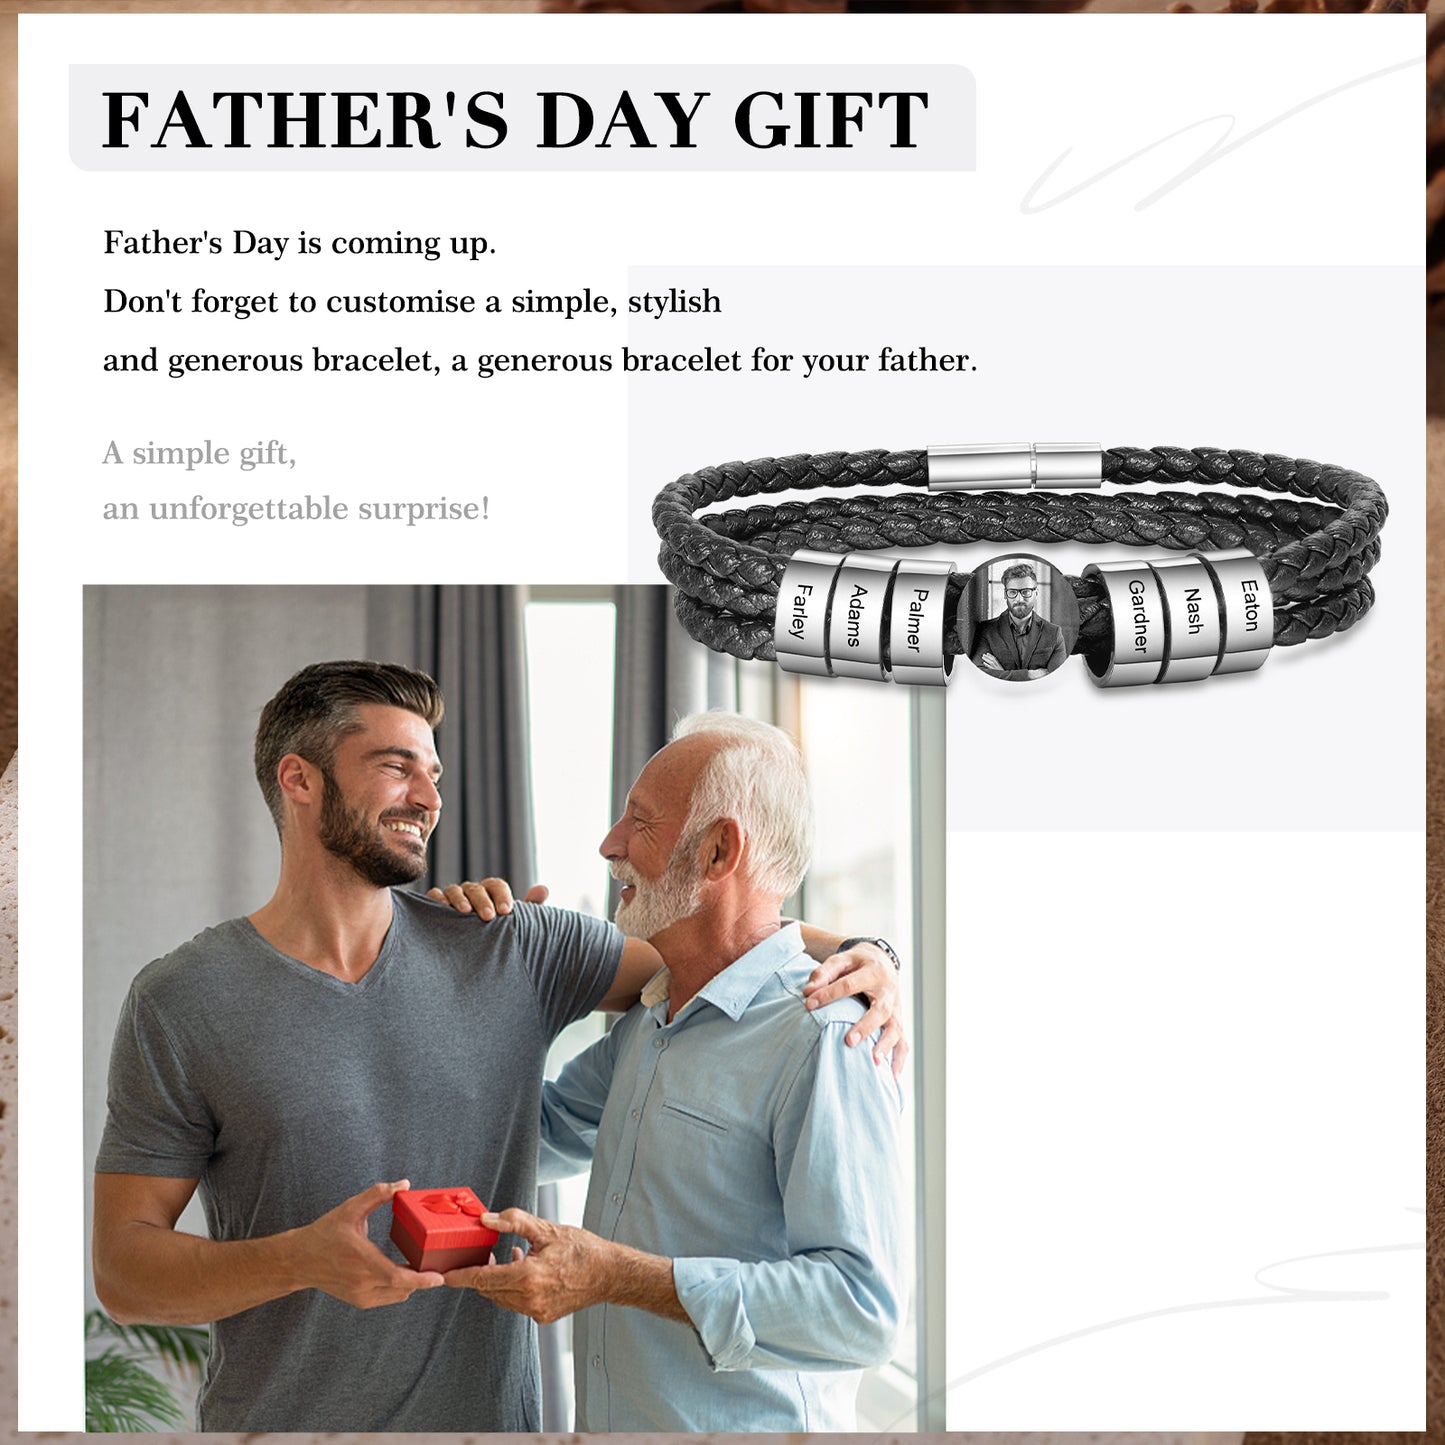 Personalised Photo Leather Bracelet For Men with Engraved Charms | Bespoke Leather Bracelet For Men With Photo | Customised Gift for Dad | Father's Day Gift Idea